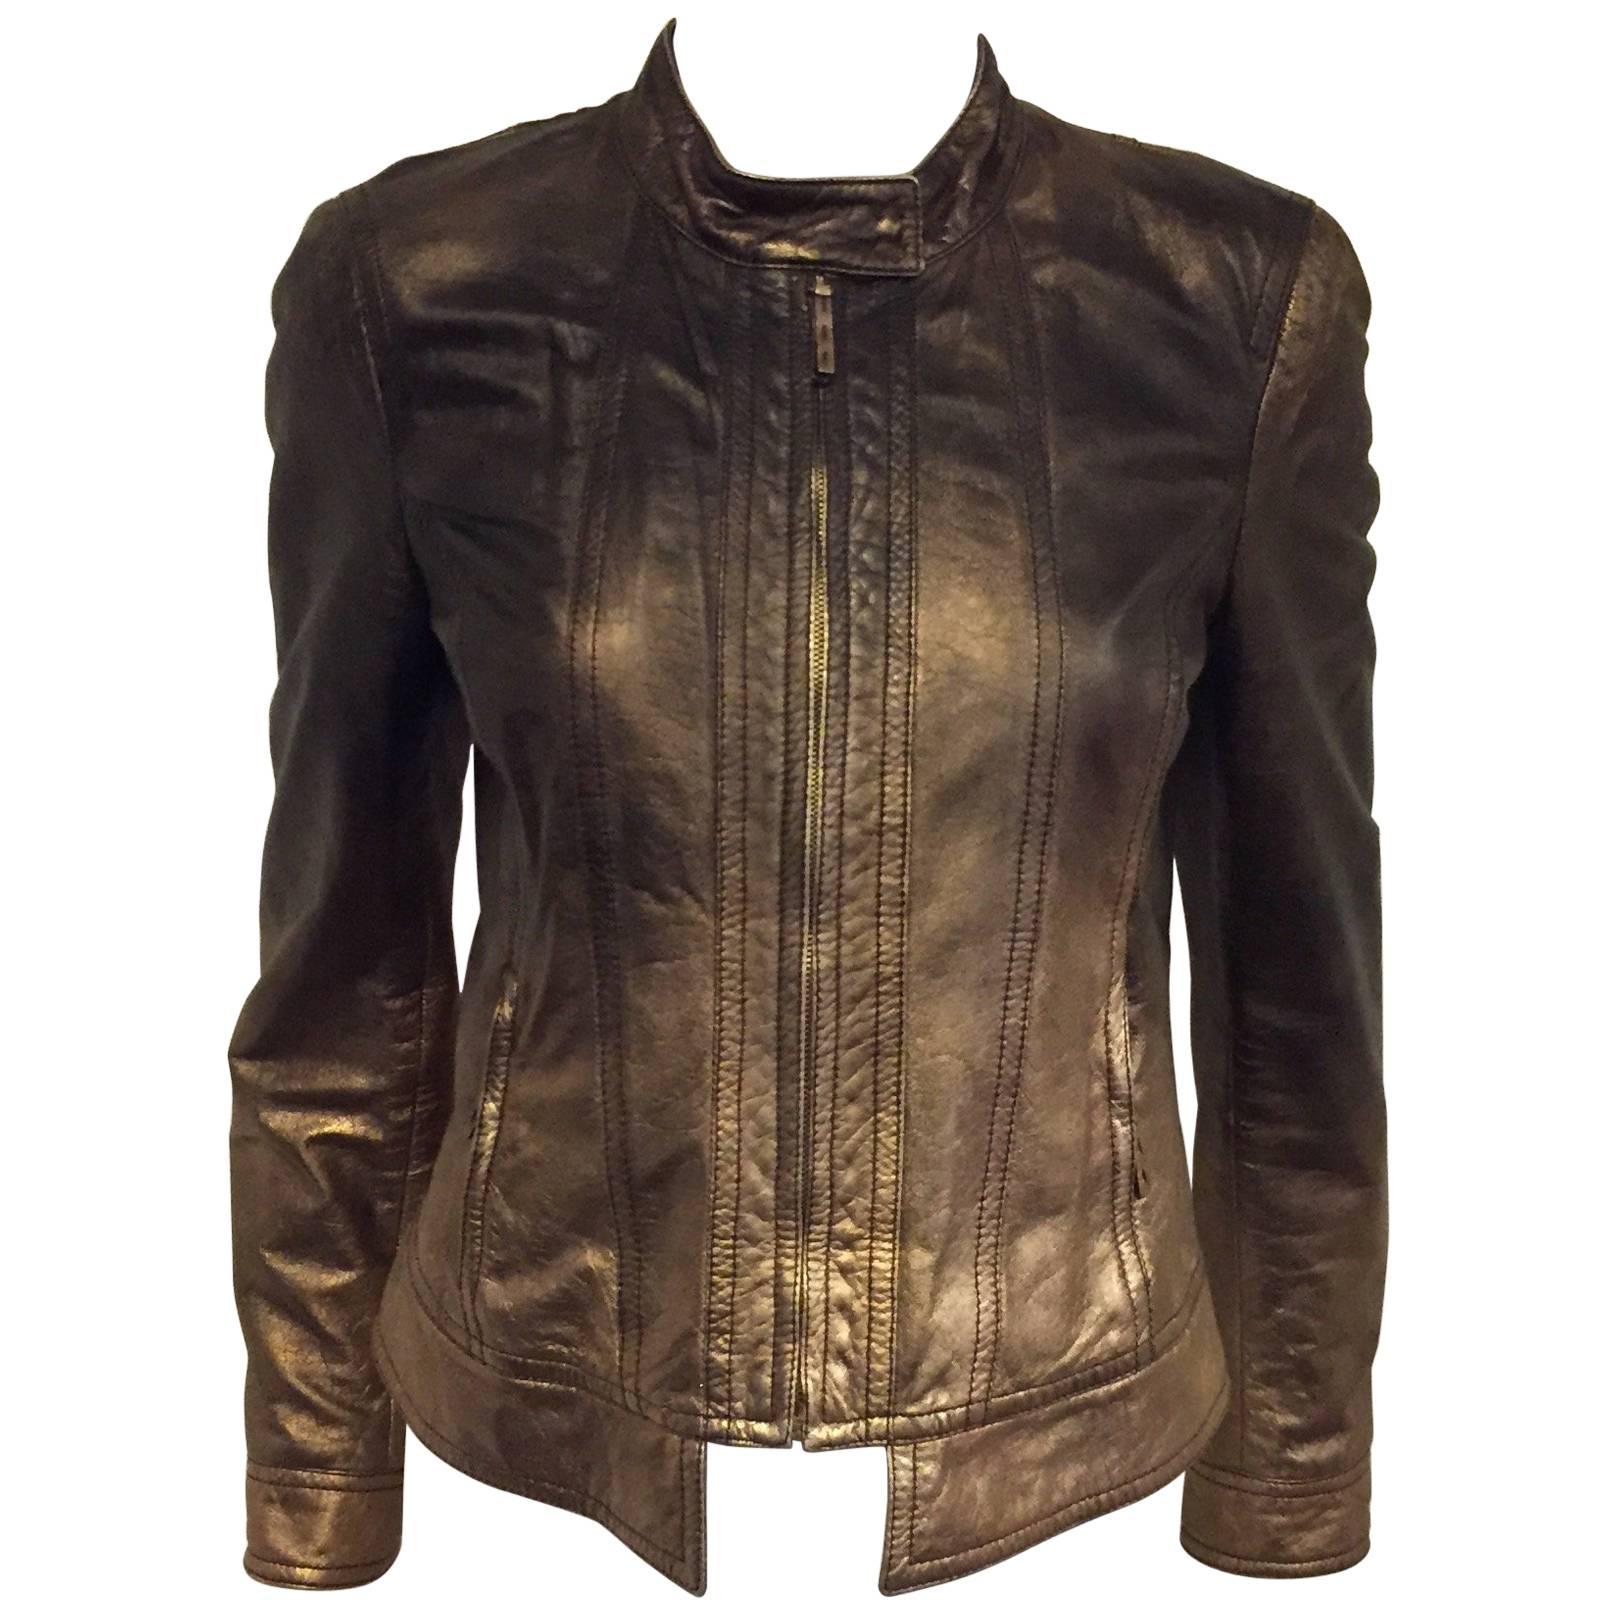 Remarkable Roberto Cavalli's Bomber Leather Jacket in Bronze Metal Color